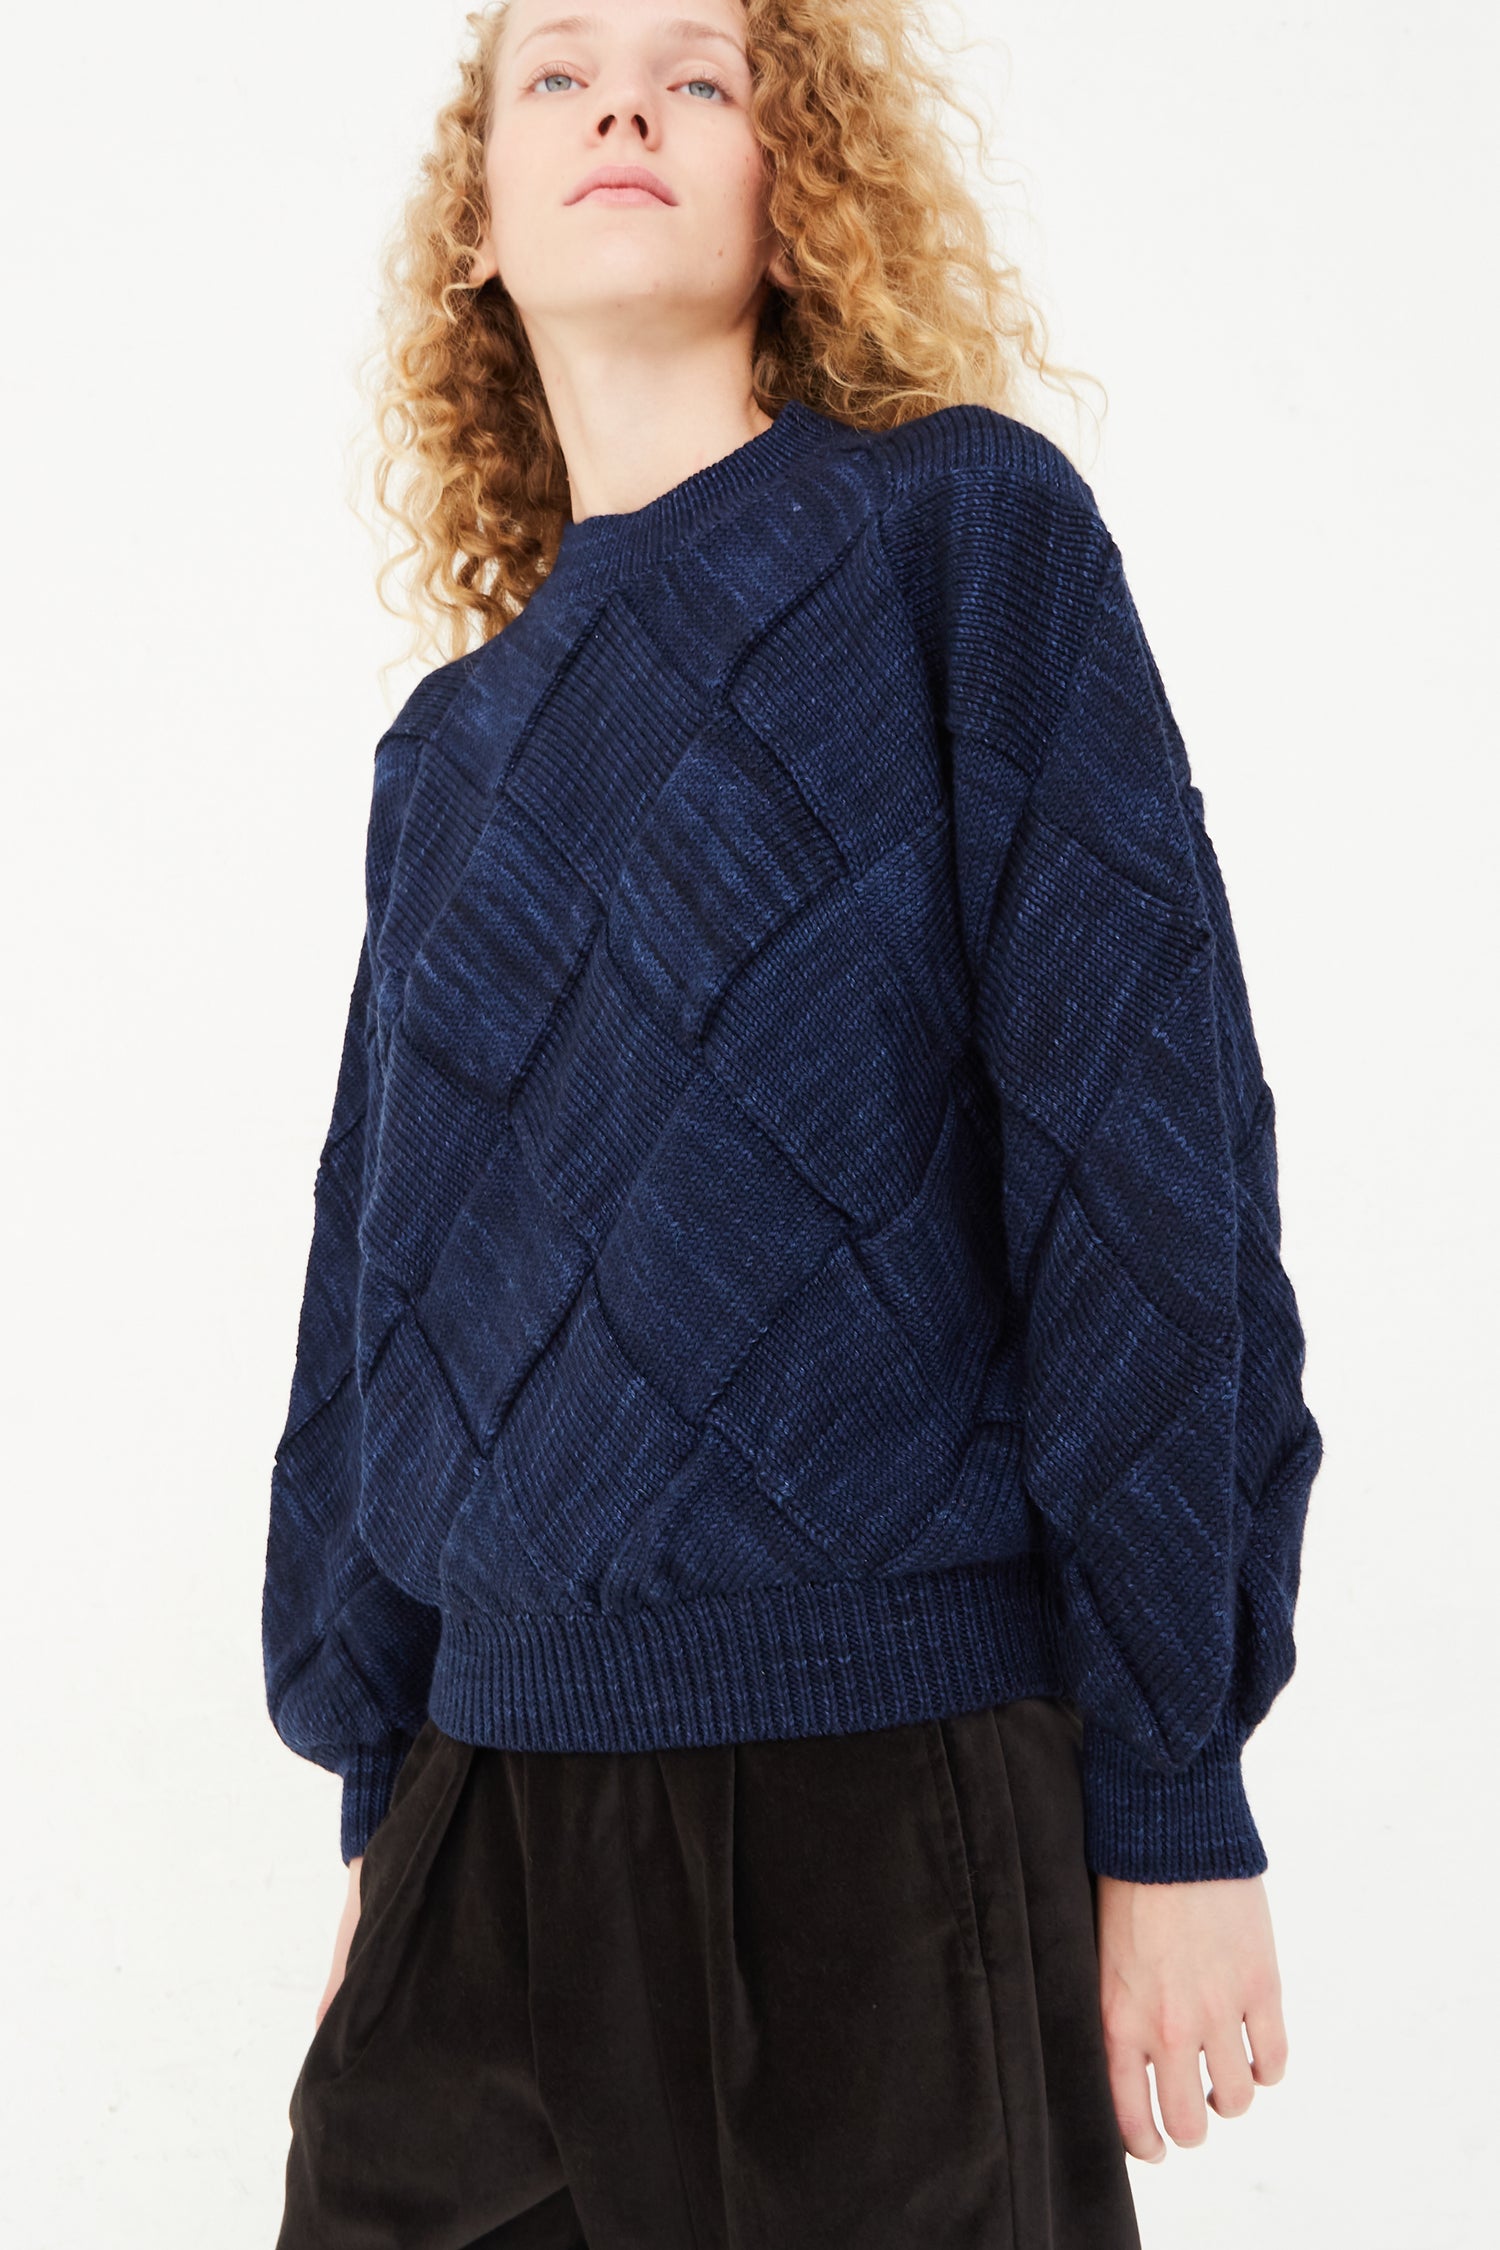 Misha & Puff - Entrelac Sweater in Ink | Oroboro Store